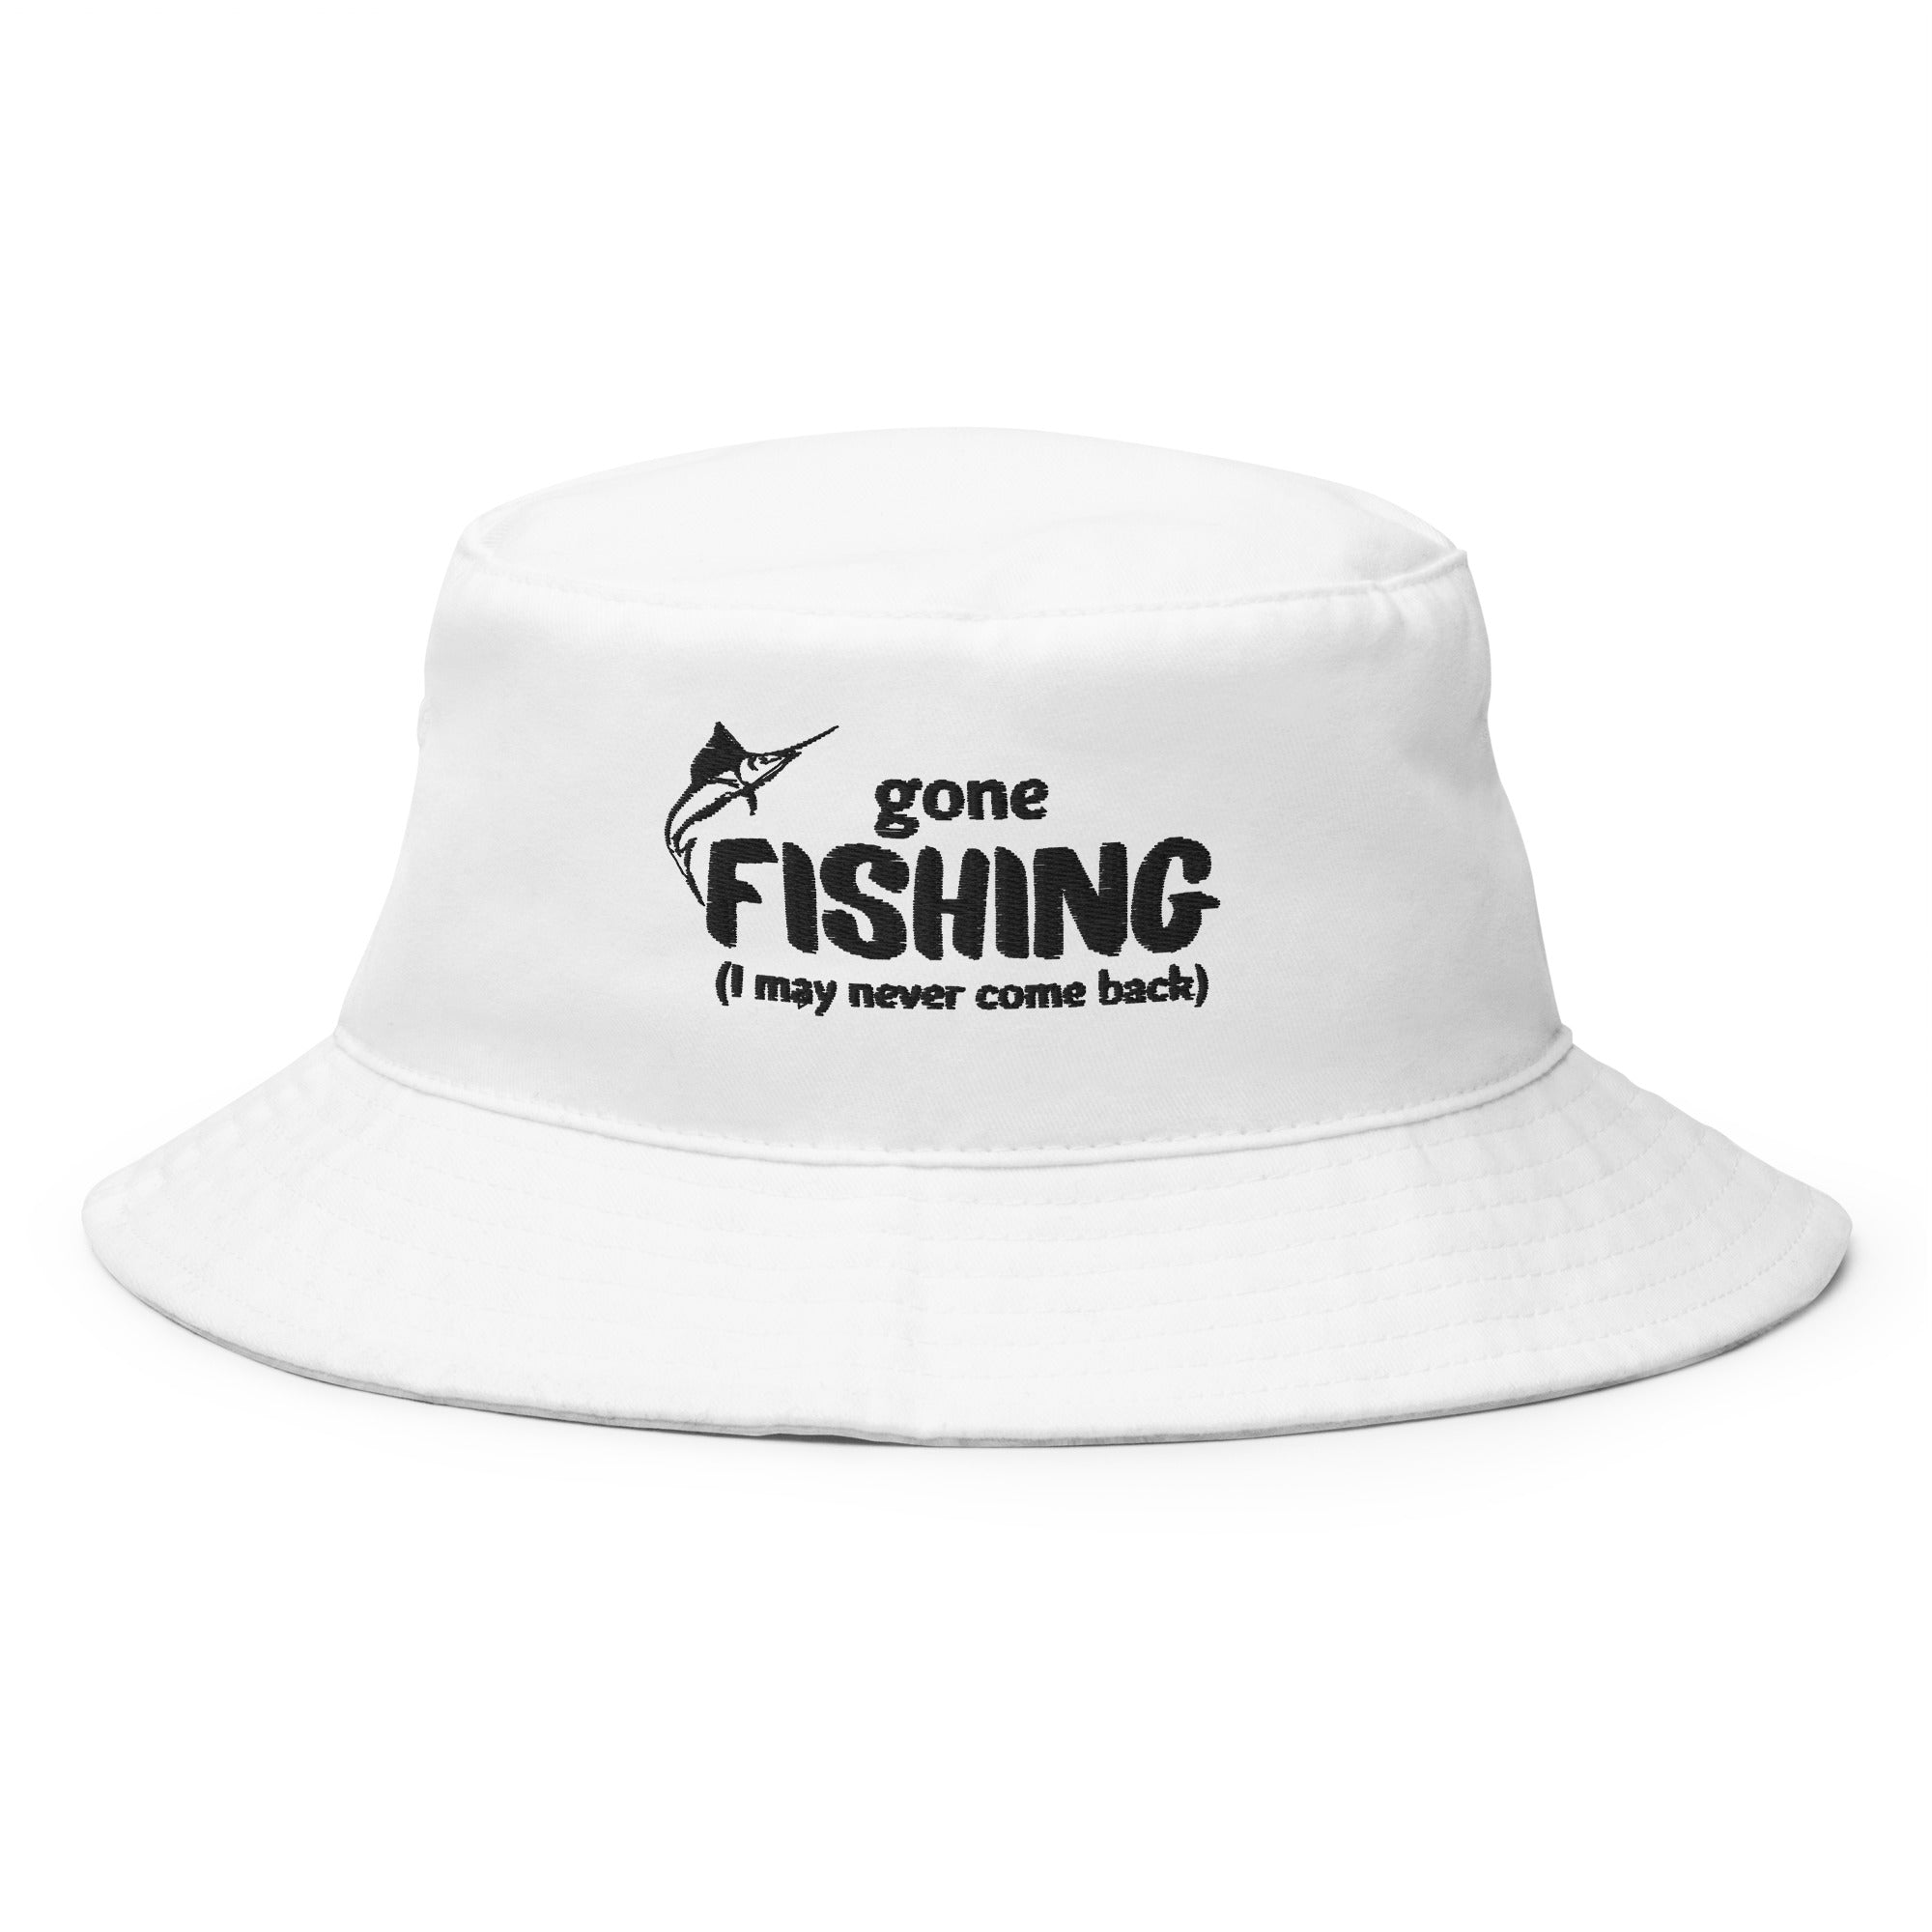 "Gone Fishing" Bucket Hat - Light Colors